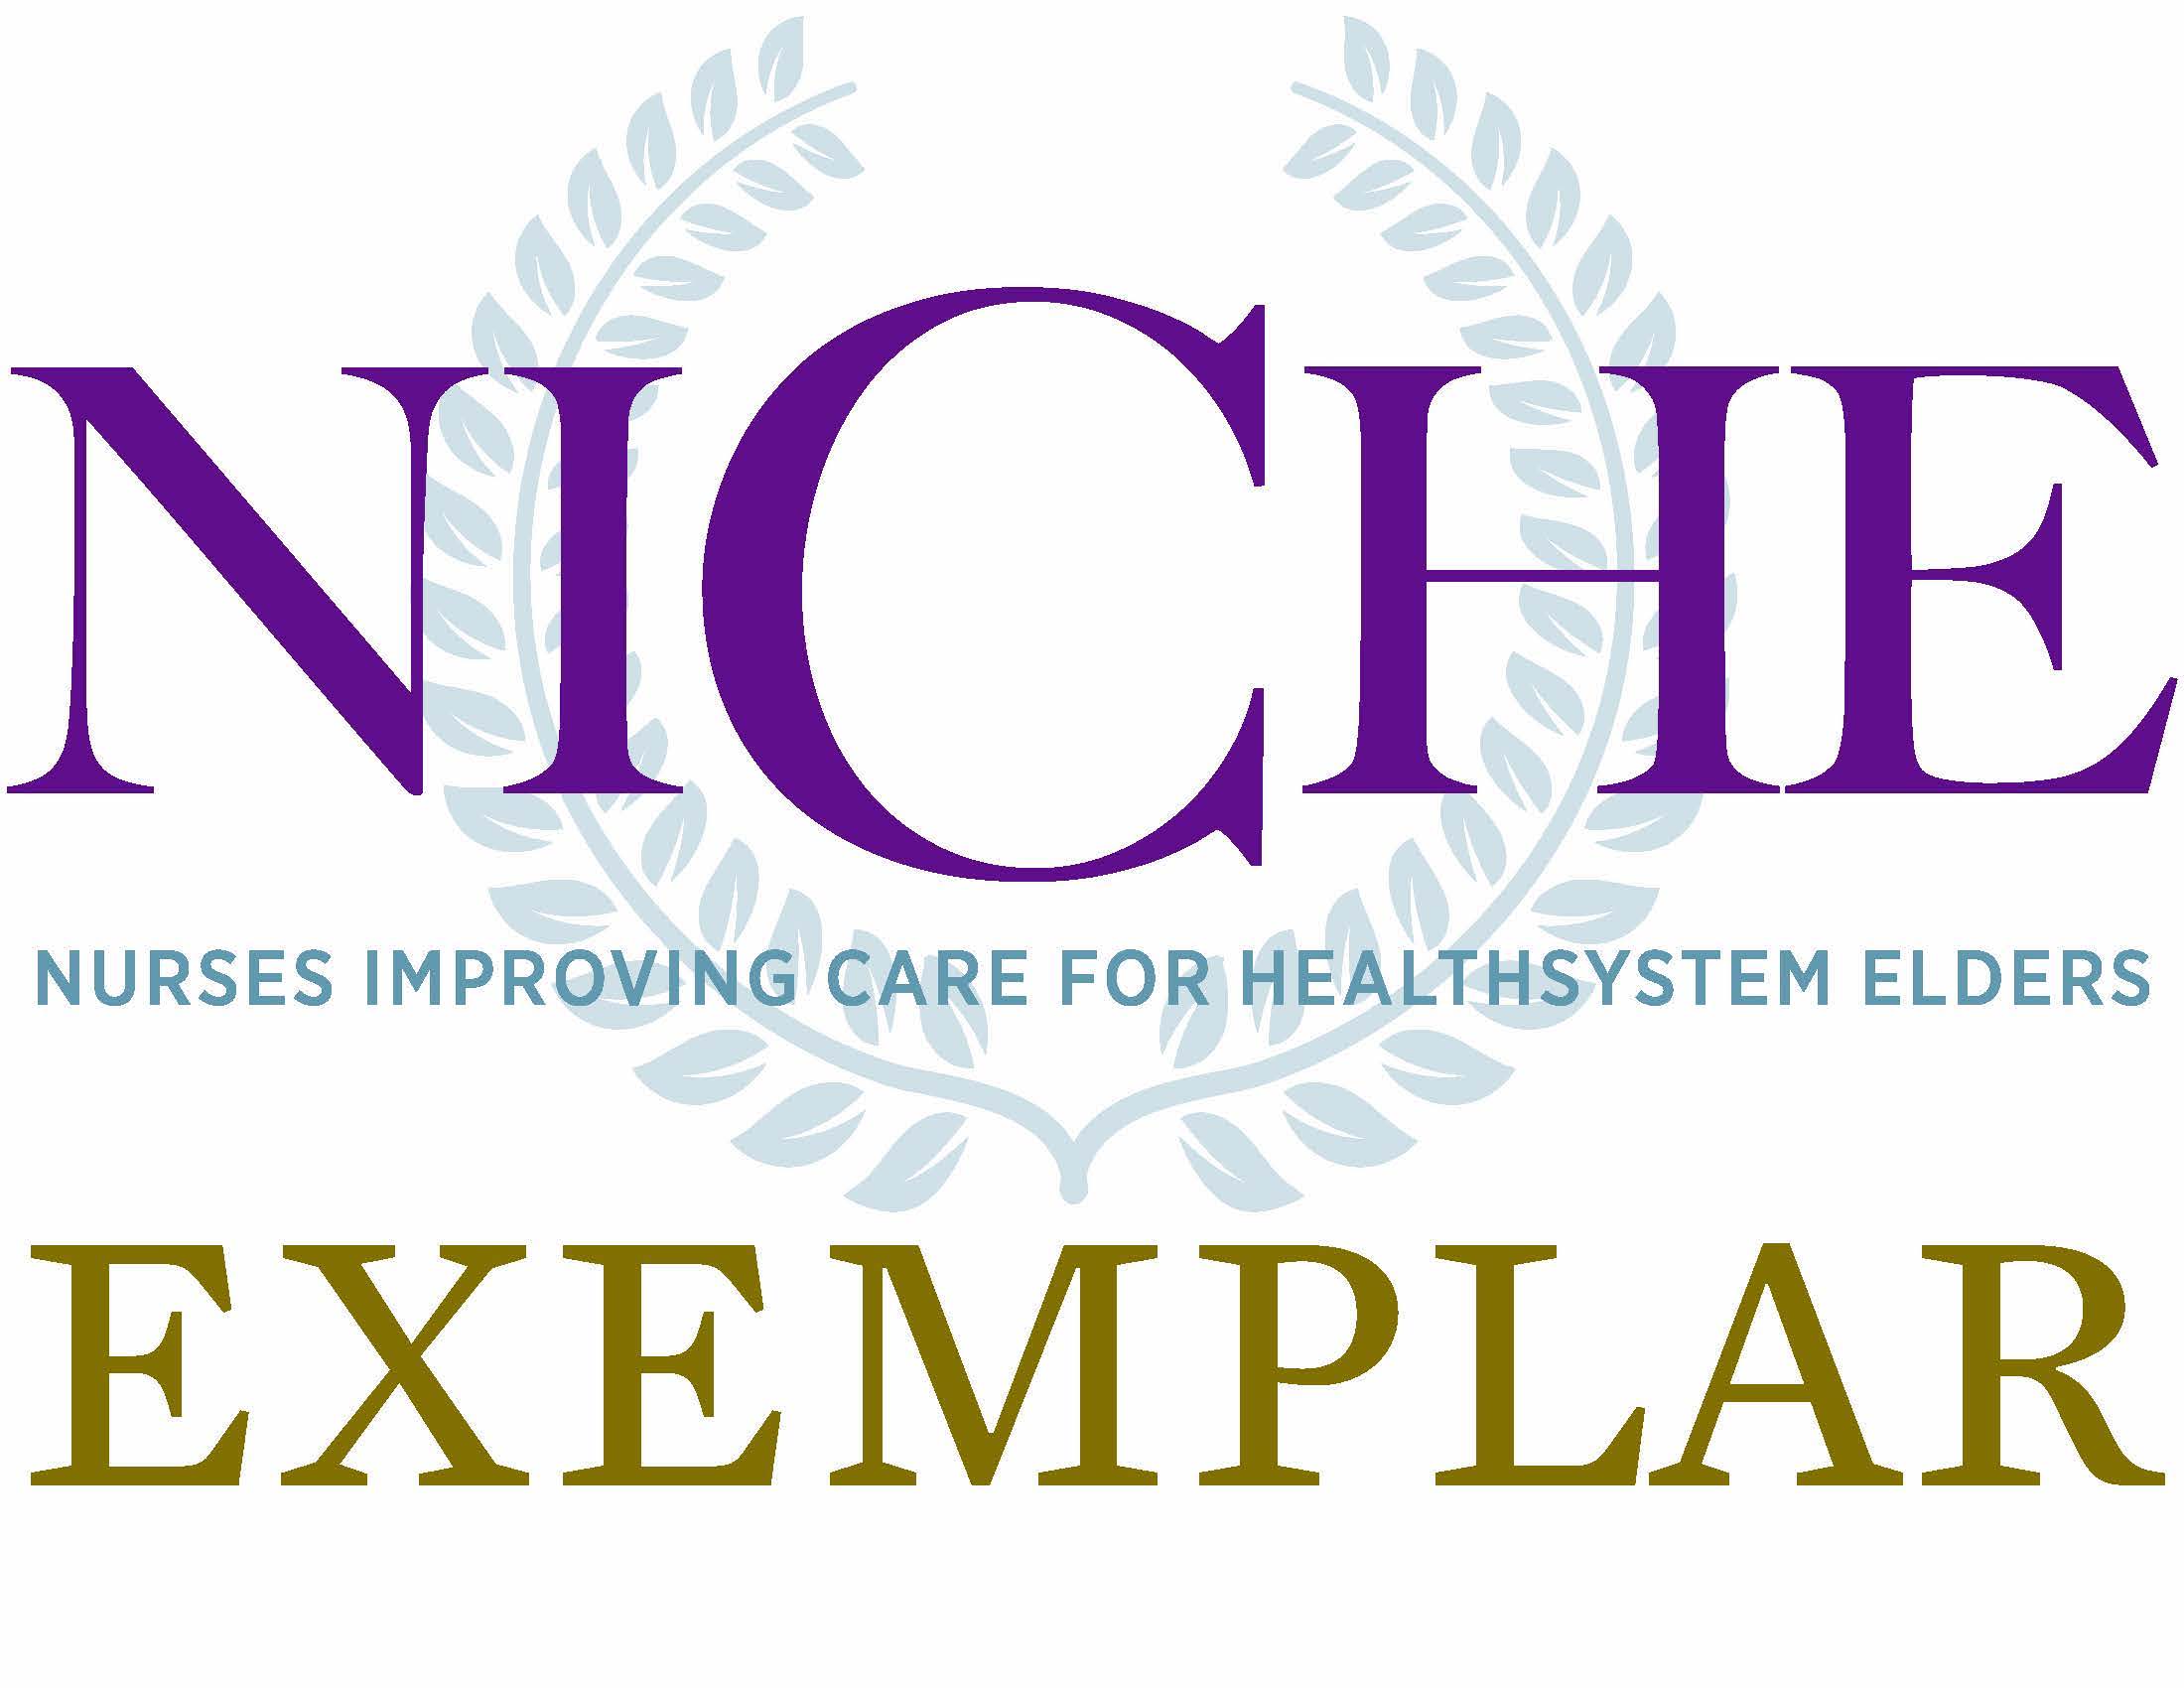 NICHE Exemplar - Nurses Improving Care for Healthsystem Elders